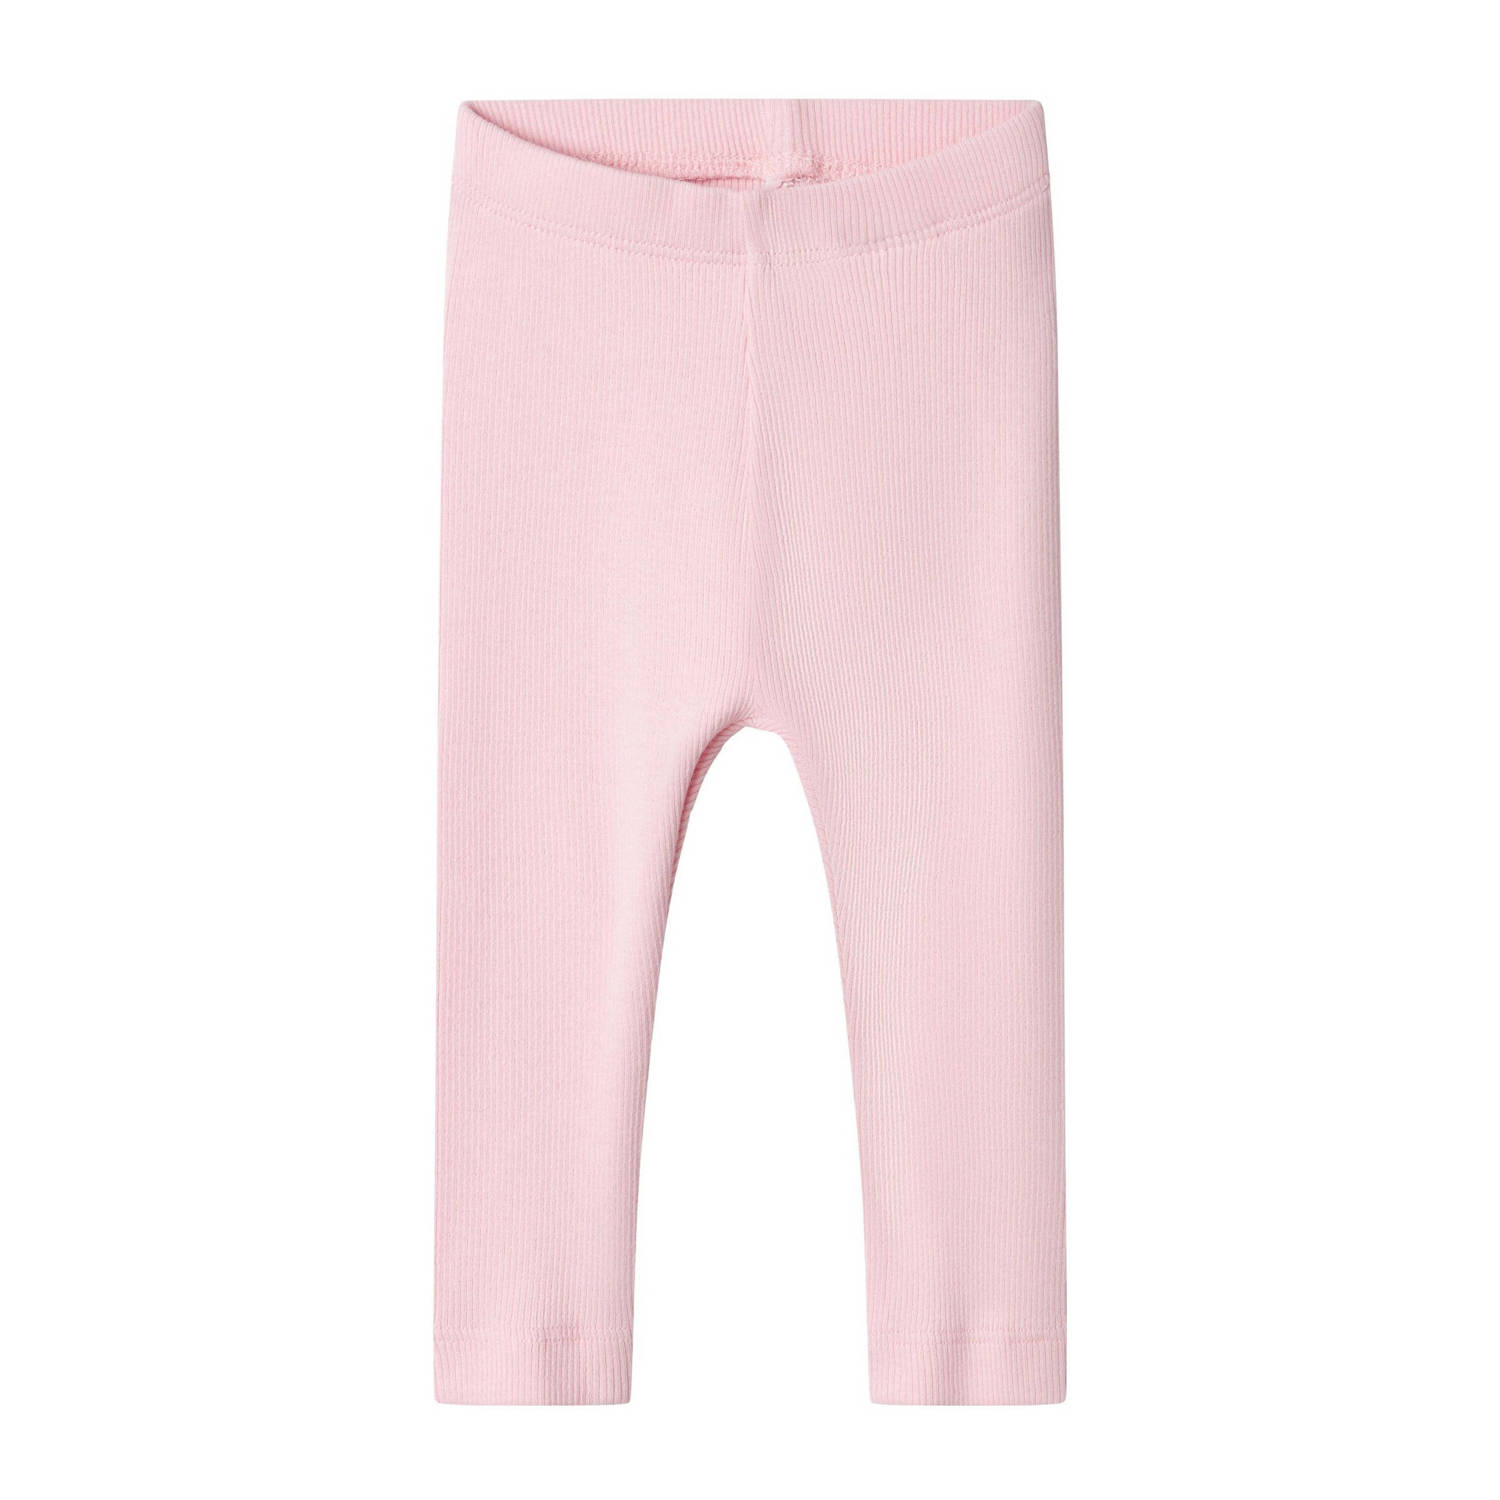 Name it BABY legging NBNKAB parfait pink Roze Stretchkatoen 104